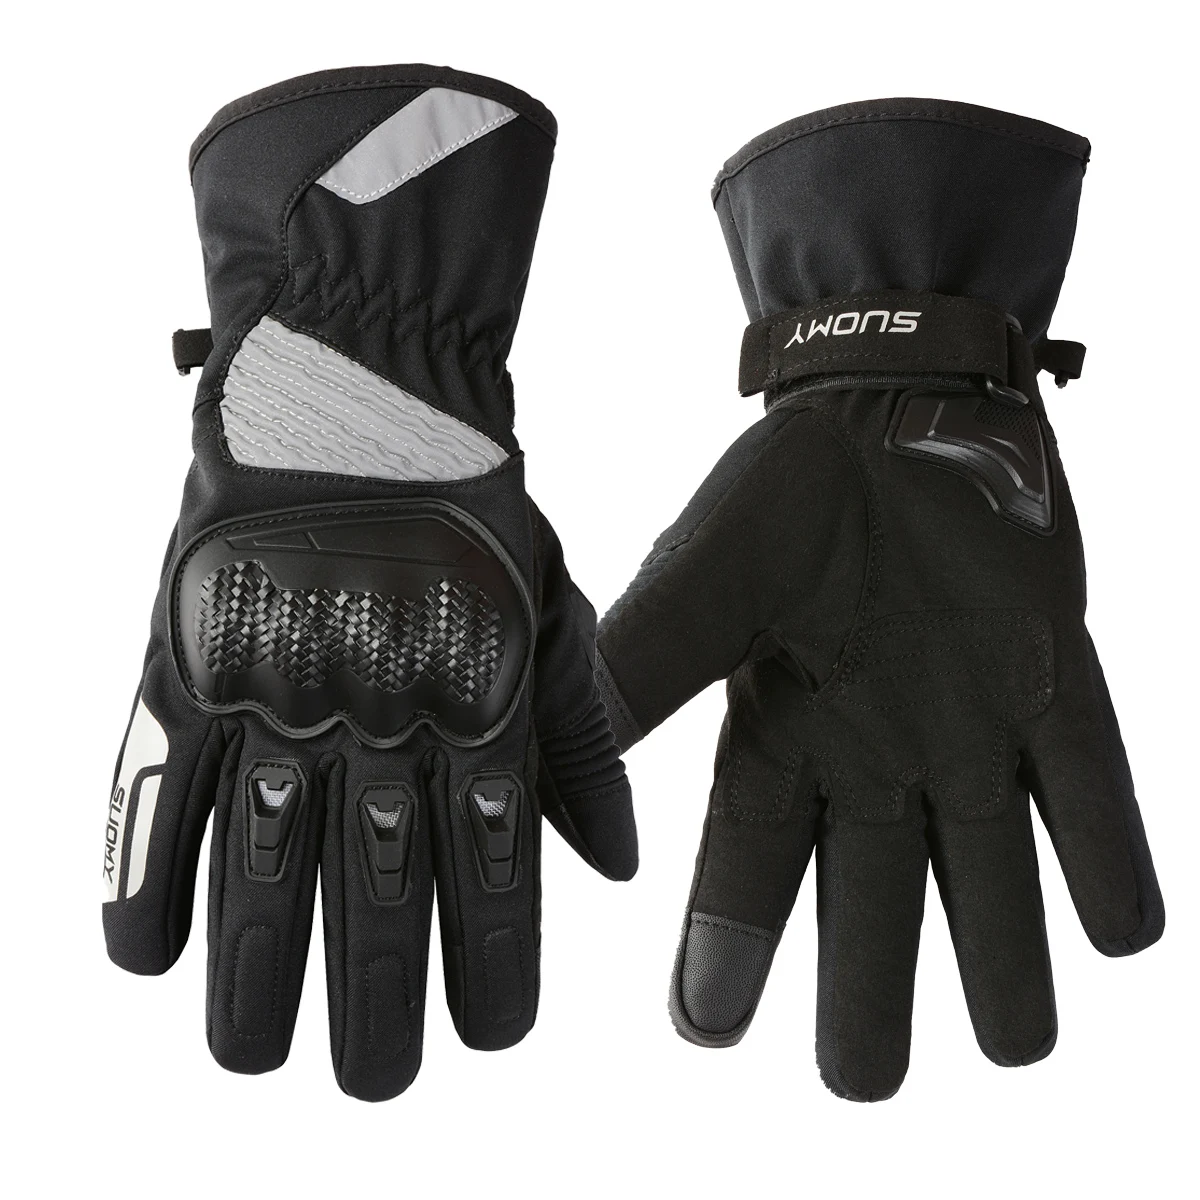 

Suomy Winter warm motorcycle gloves 100% Waterproof windproof Guantes Moto Luvas Touch Screen luva motociclista luvas moto, Black/gren/red